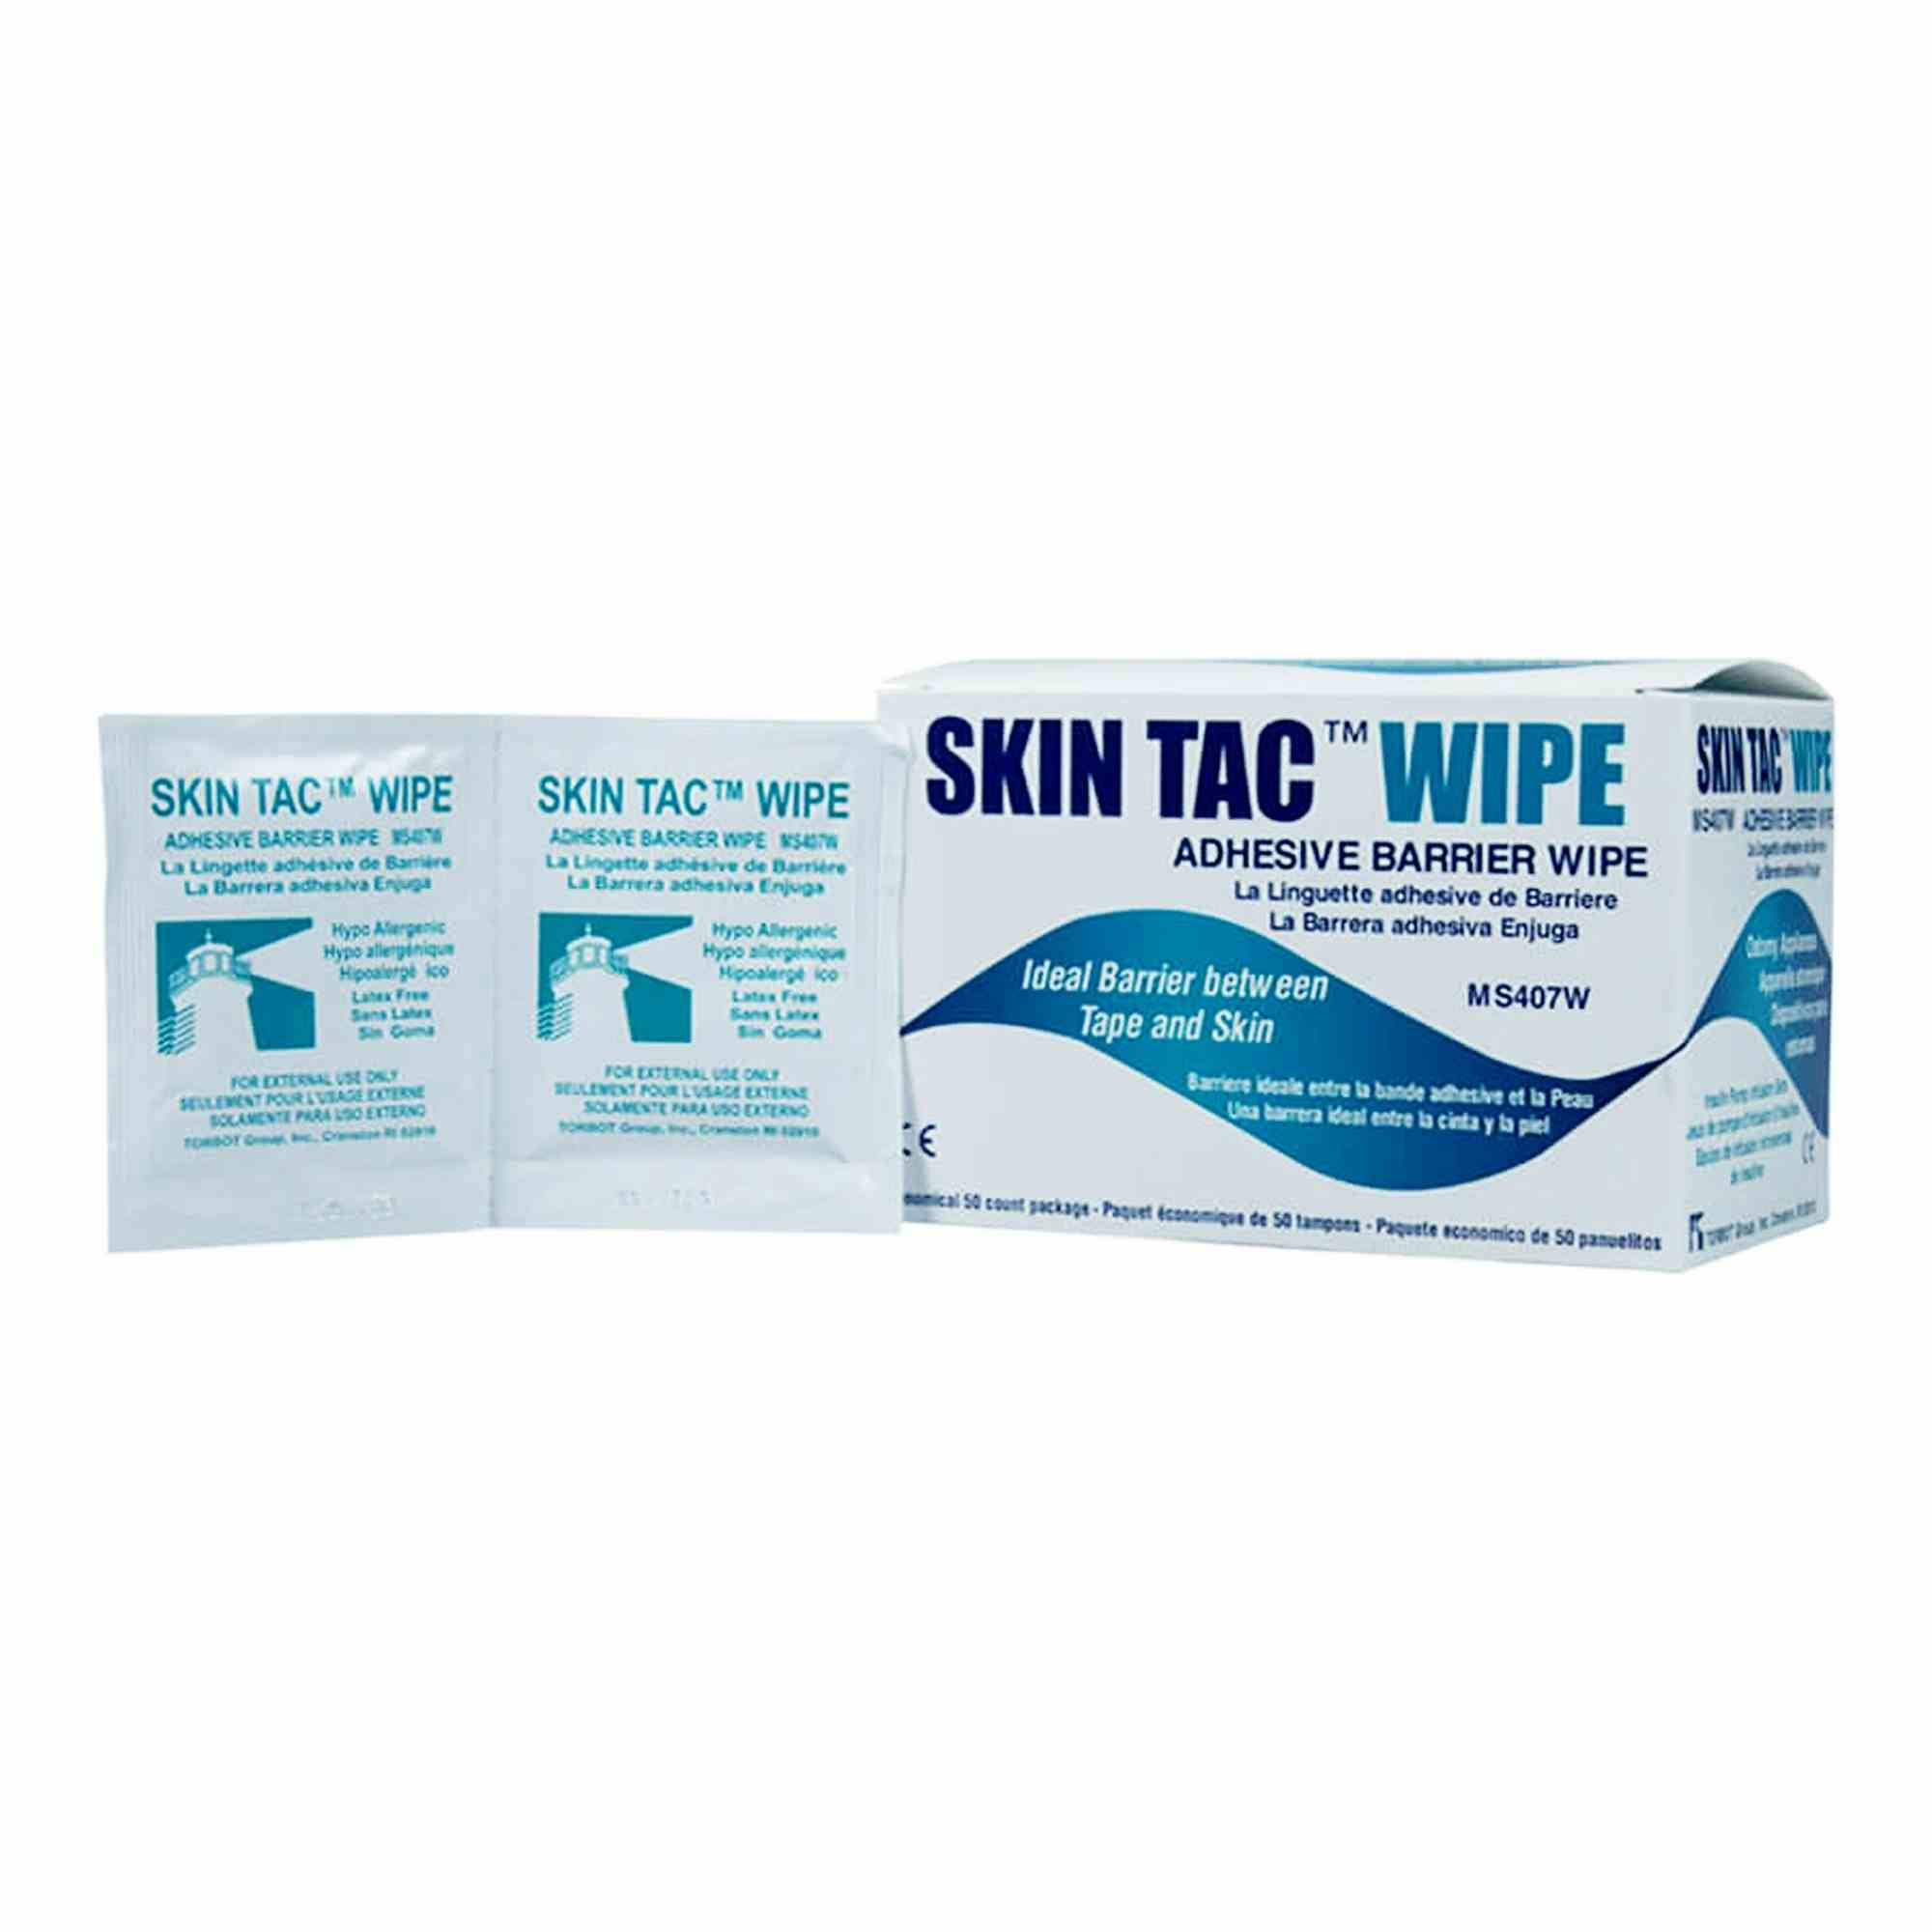 Skin Tac Wipe Adhesive Barrier Wipe, MS407W, Box of 50